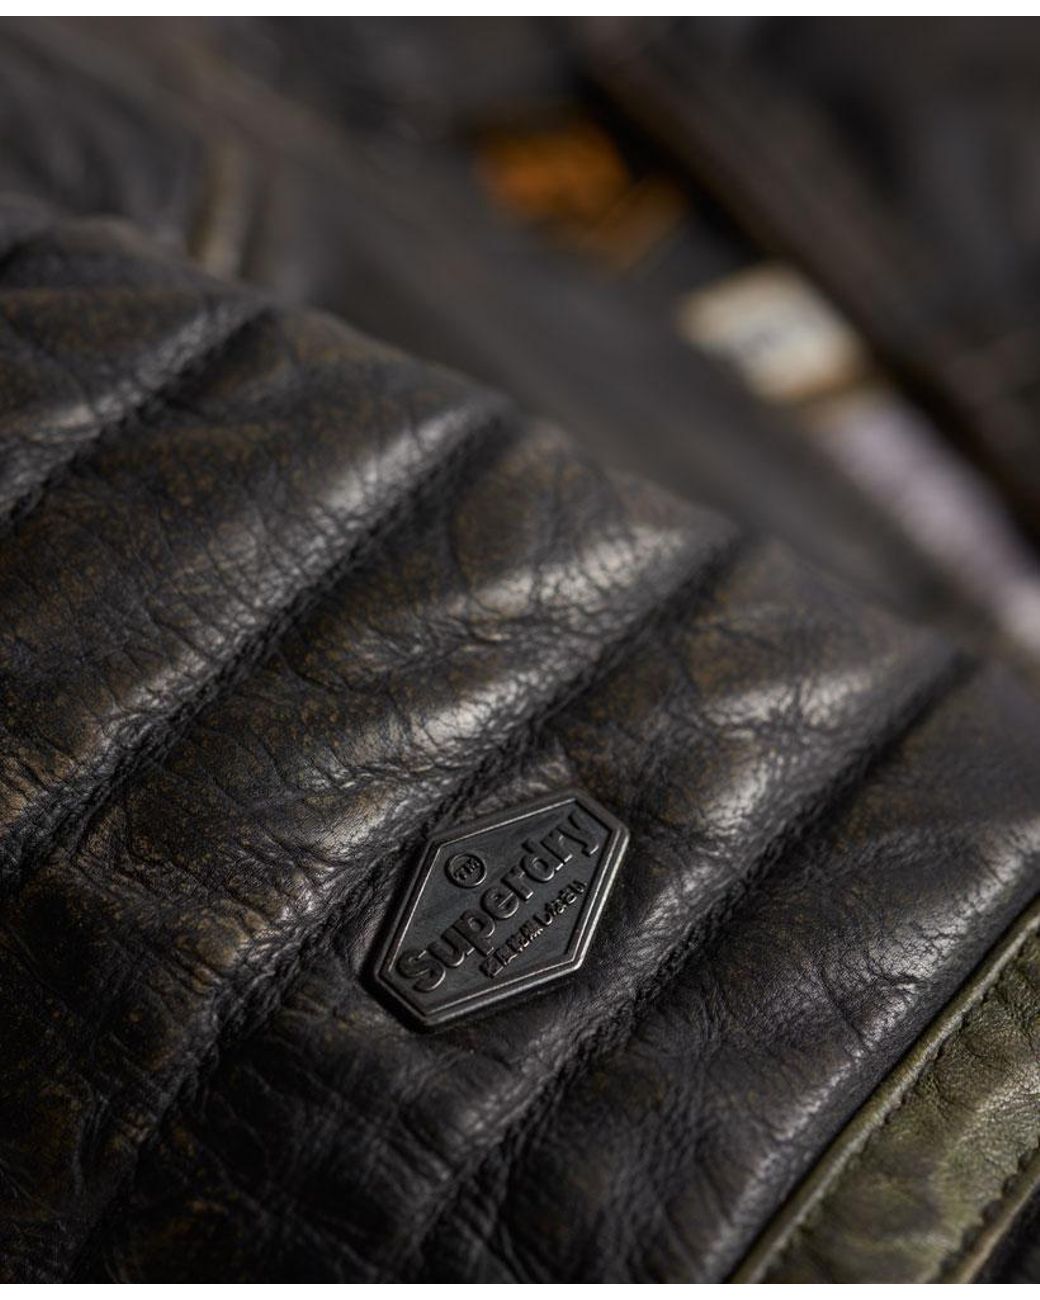 Superdry Endurance Speed Leather Jacket in Black for Men | Lyst